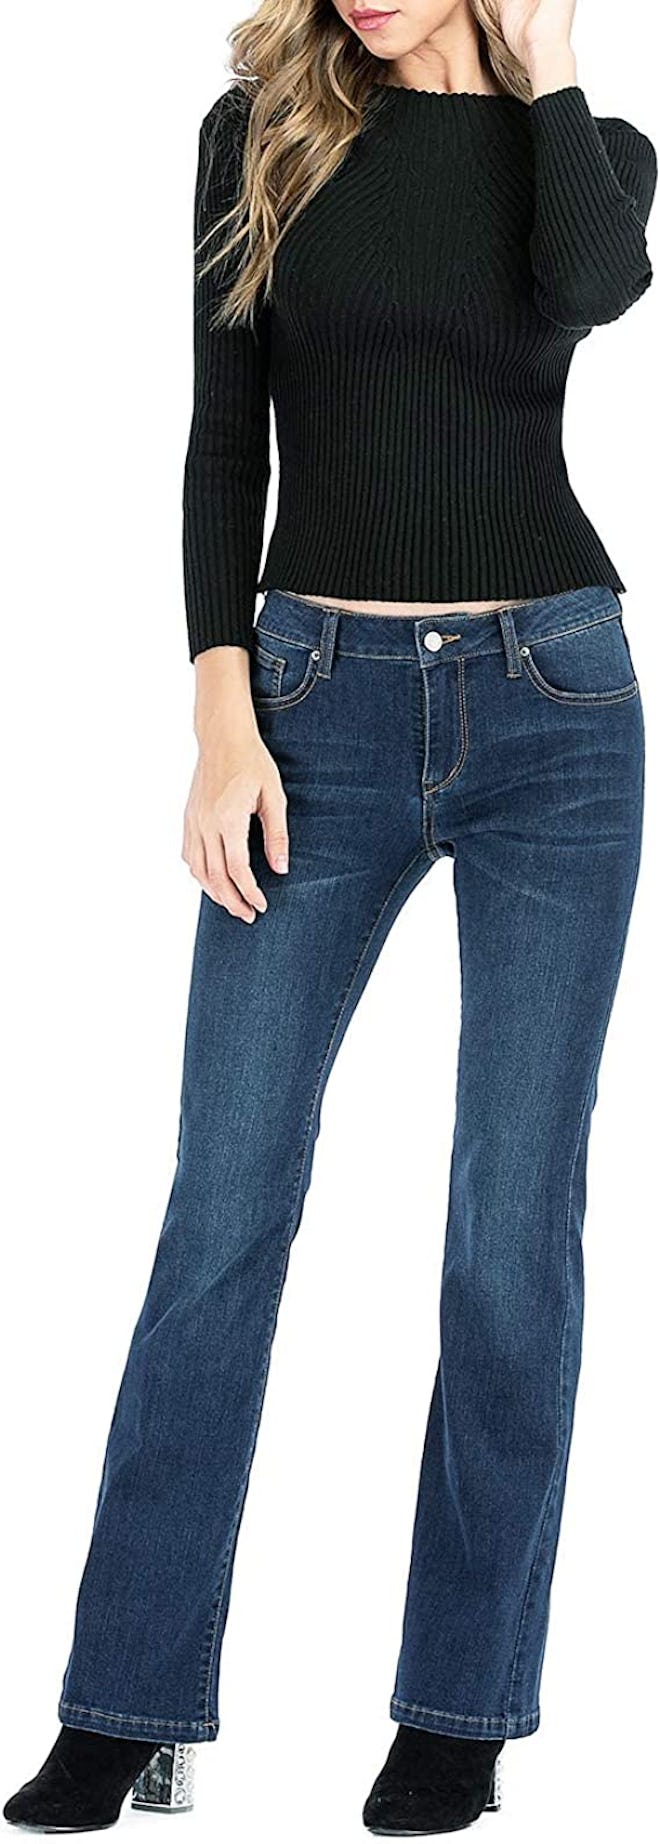 MetHera Stretch Bootcut Jeans